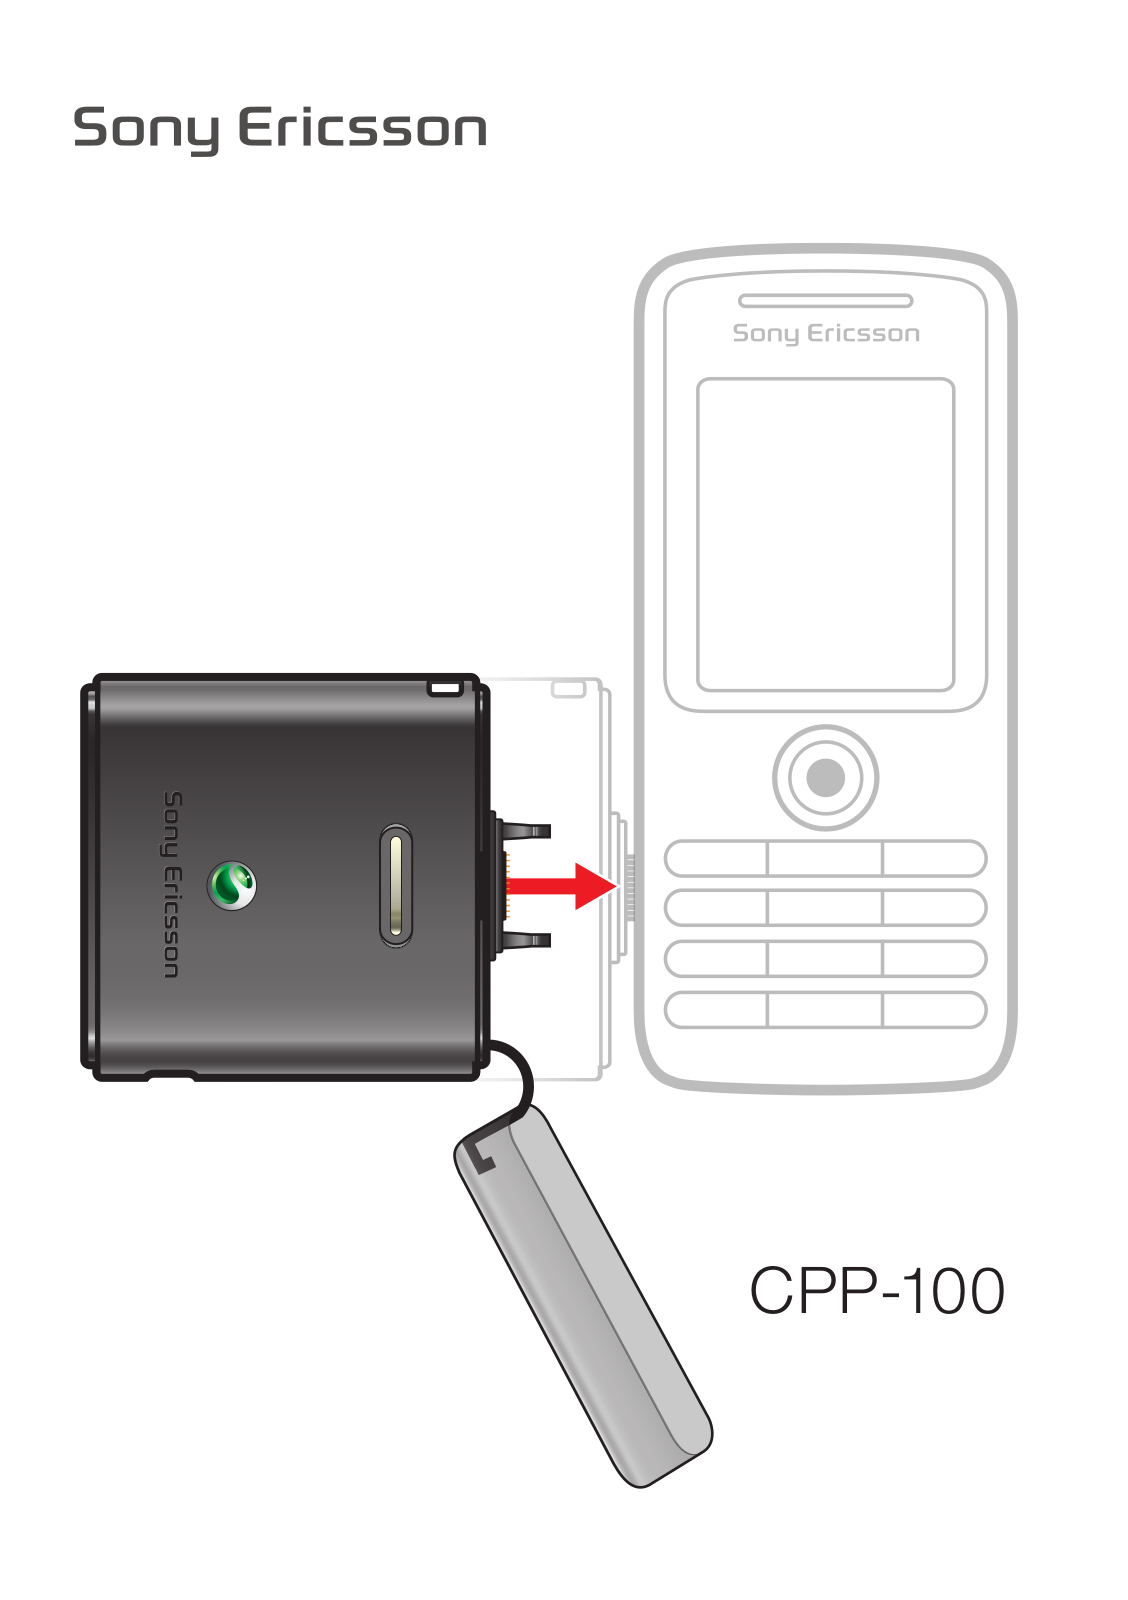 Sony Ericsson CBC-100 User Manual